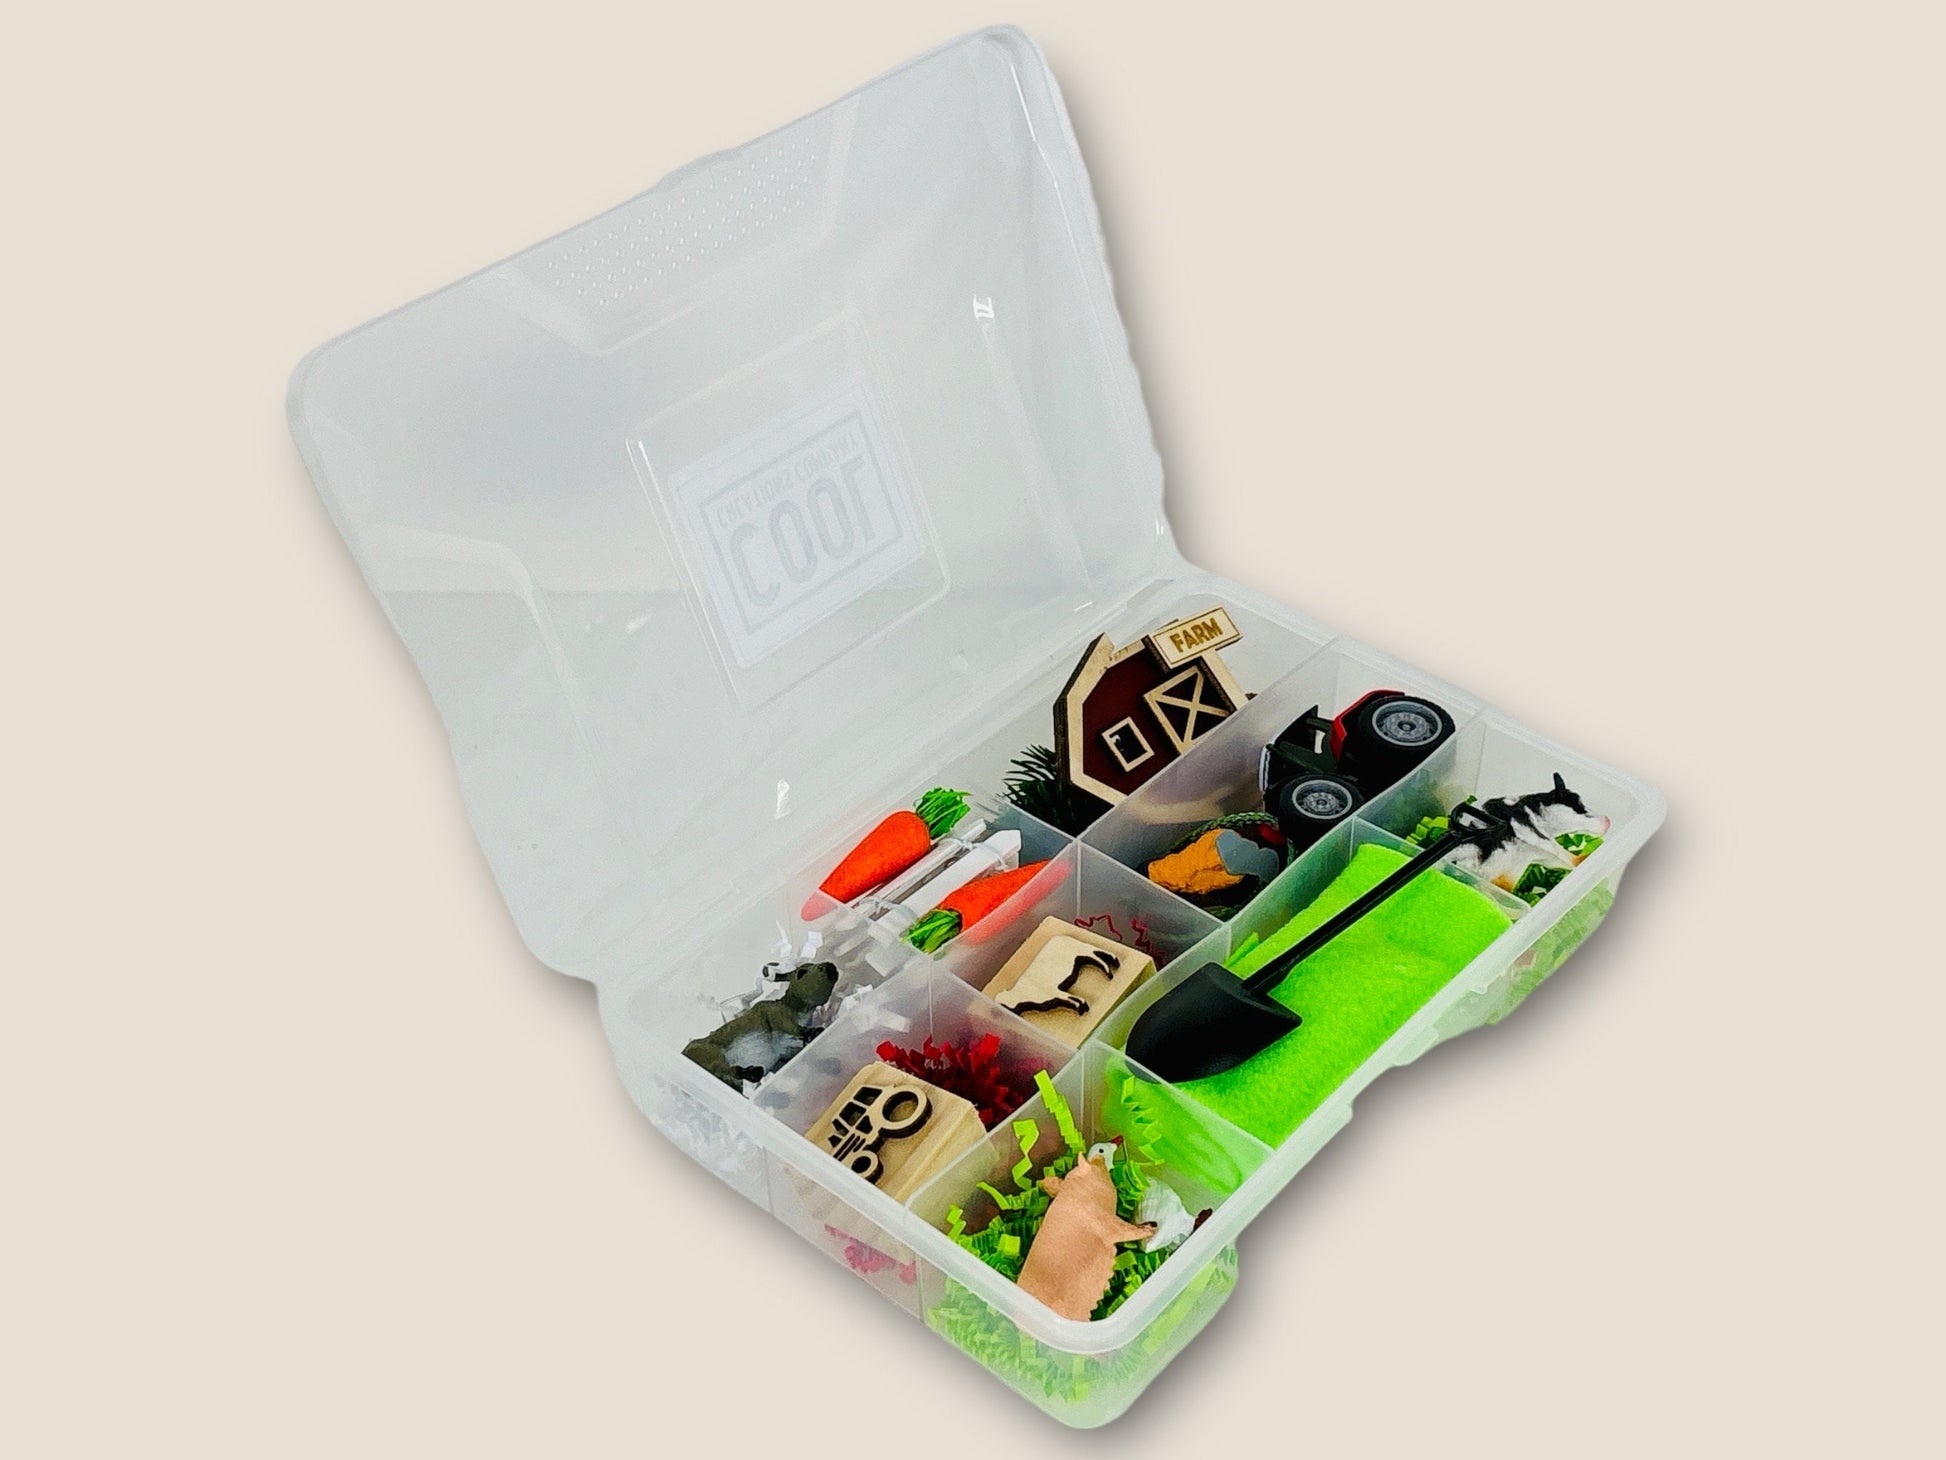 Farm Sensory Play Dough Kit, Farm Animal Busy Box, Farm Activity Boxes for Boys, Birthday gifts for Children, Kinetic Sand Kits